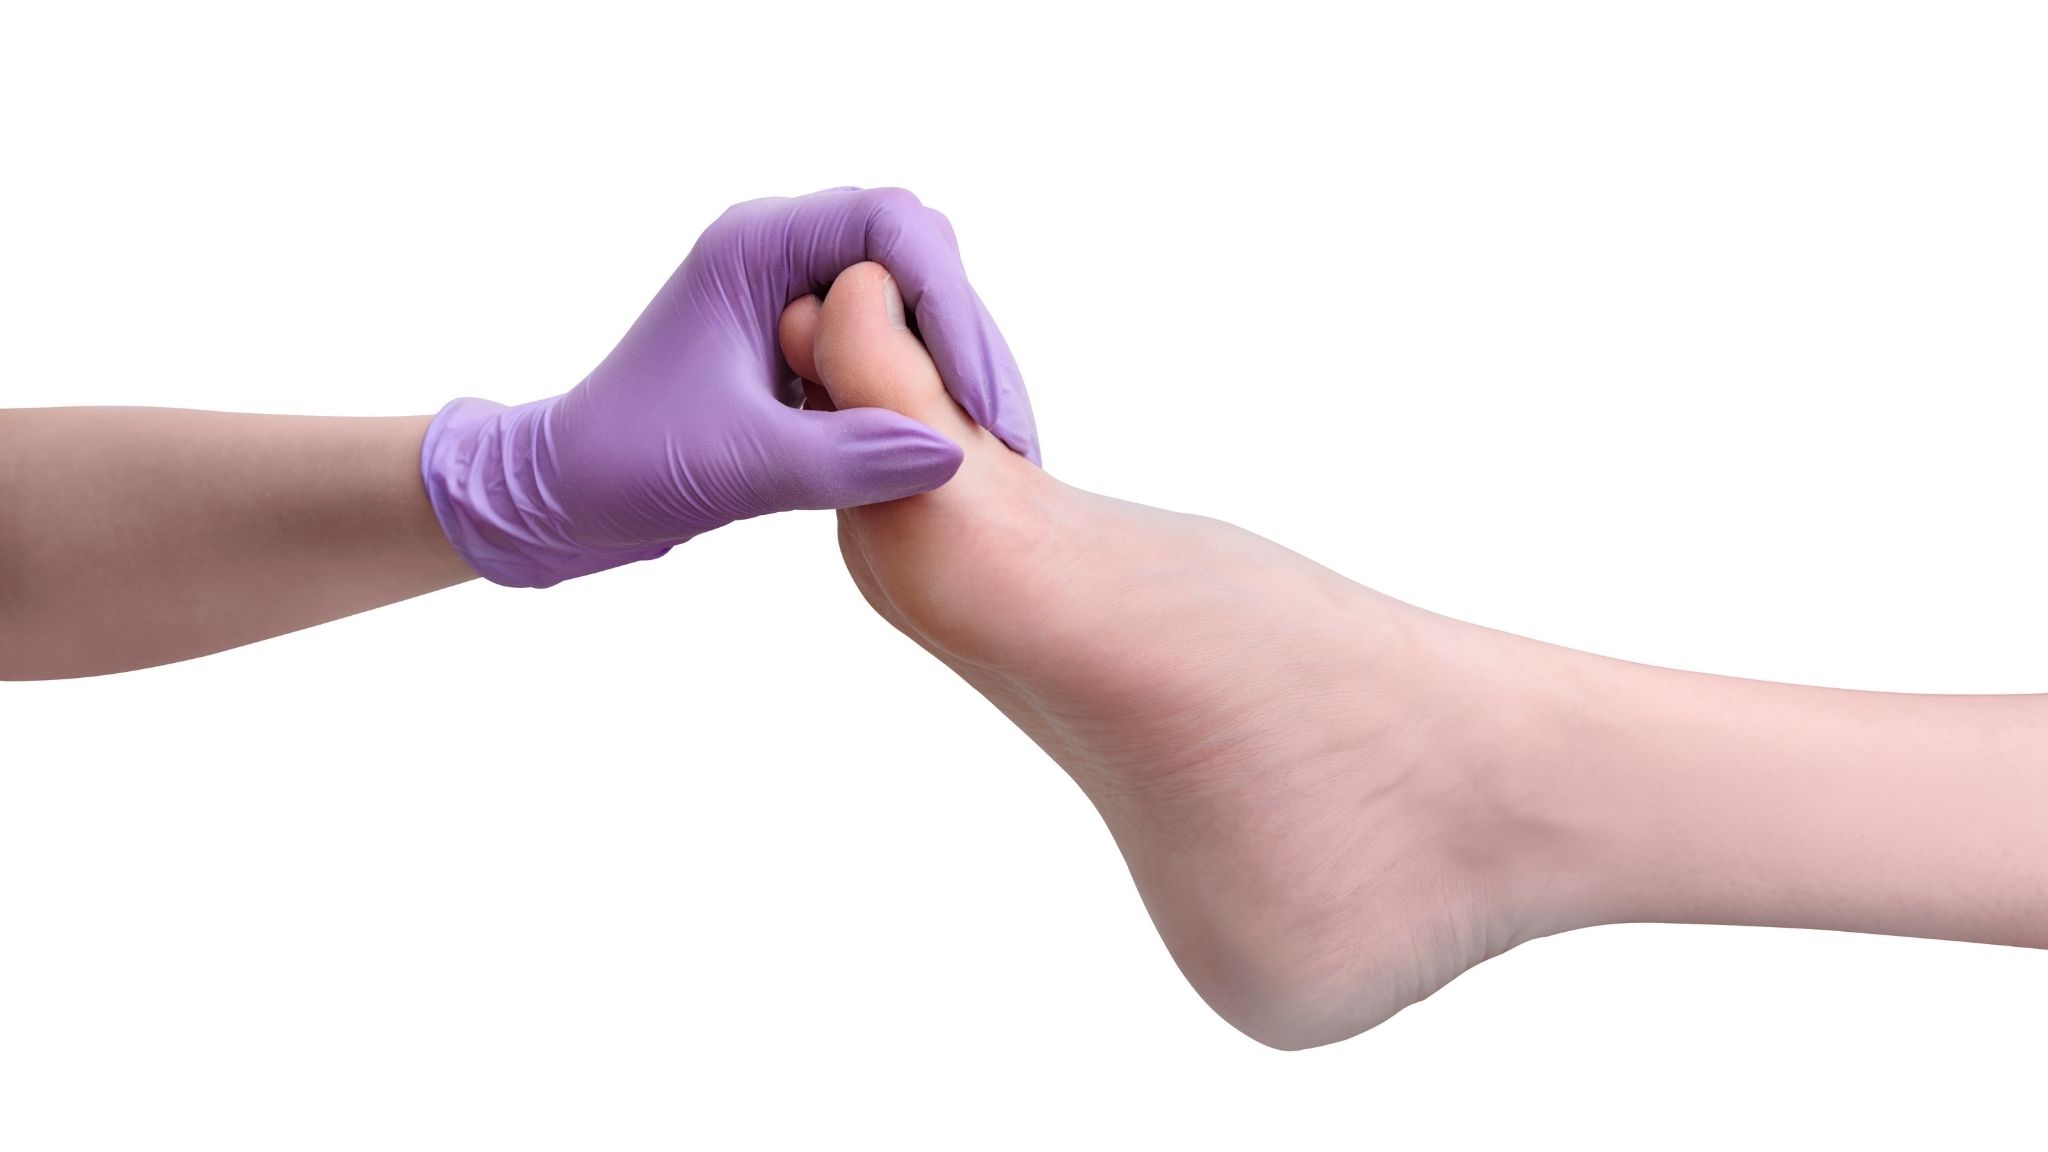 Hand in glove holds female leg 